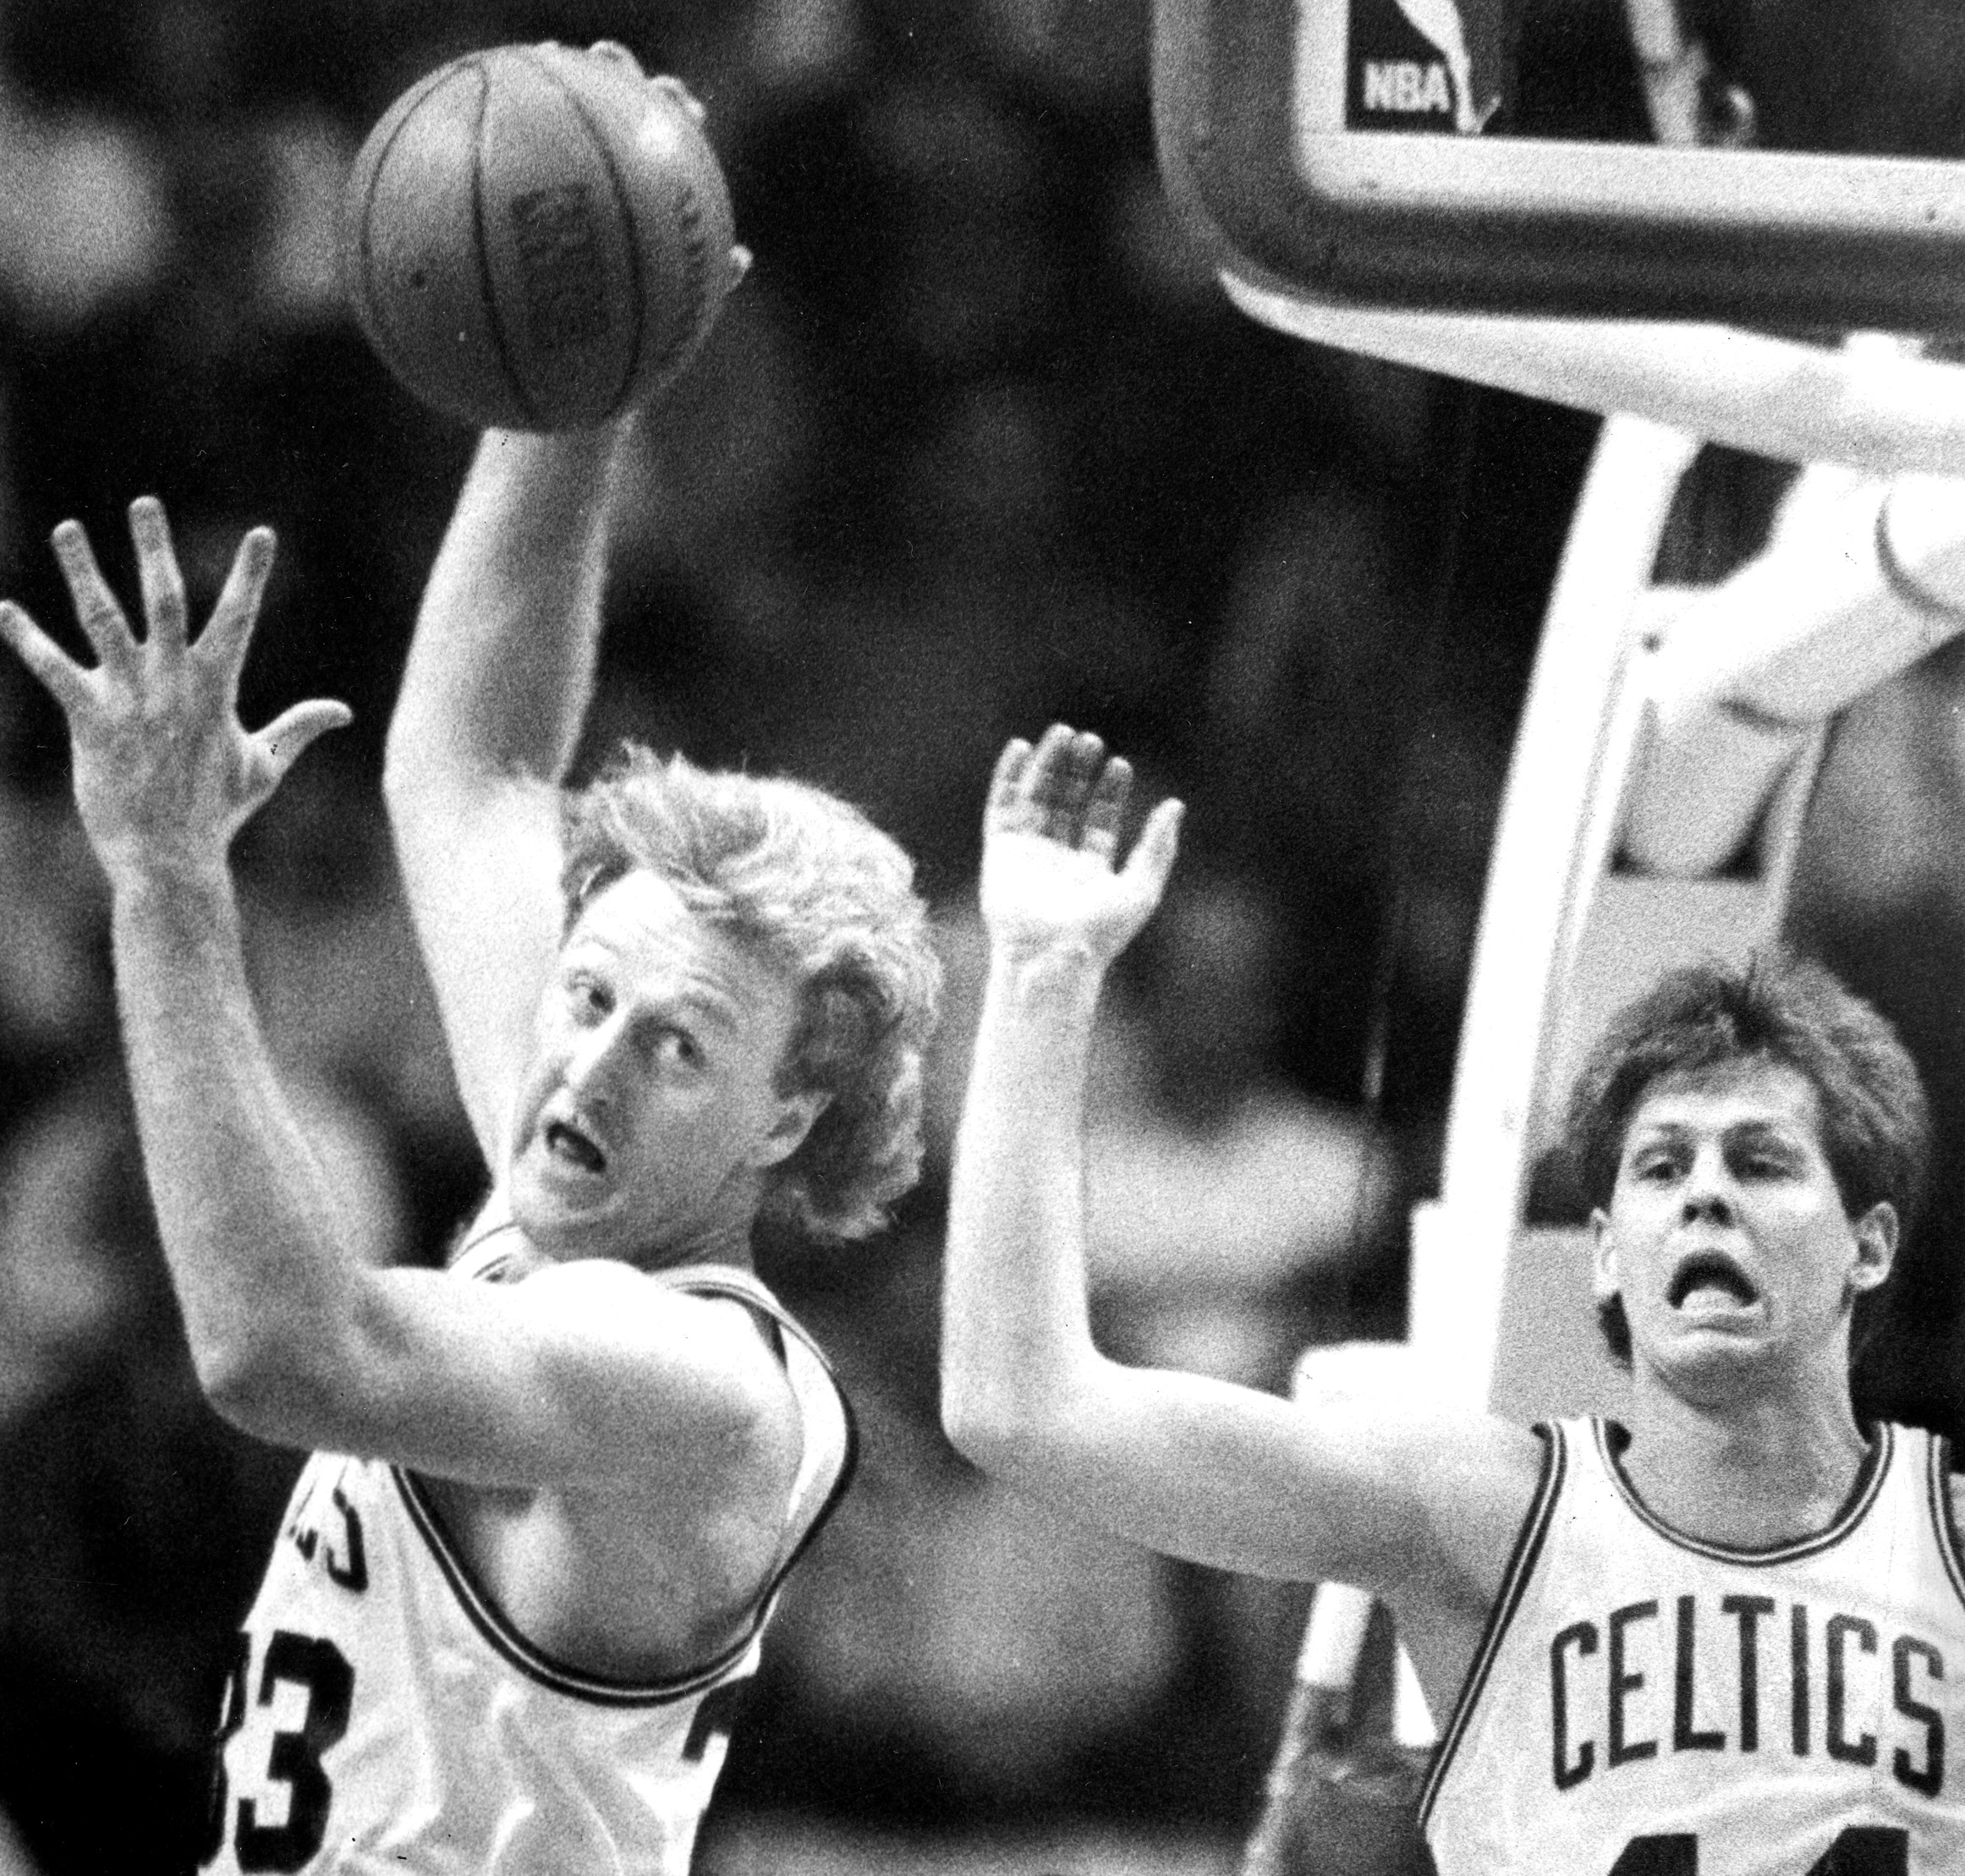 Larry Bird Interrupted Bill Walton’s Heartfelt Apology After the Boston Celtics Opened the 1985-86 Season With an OT Loss